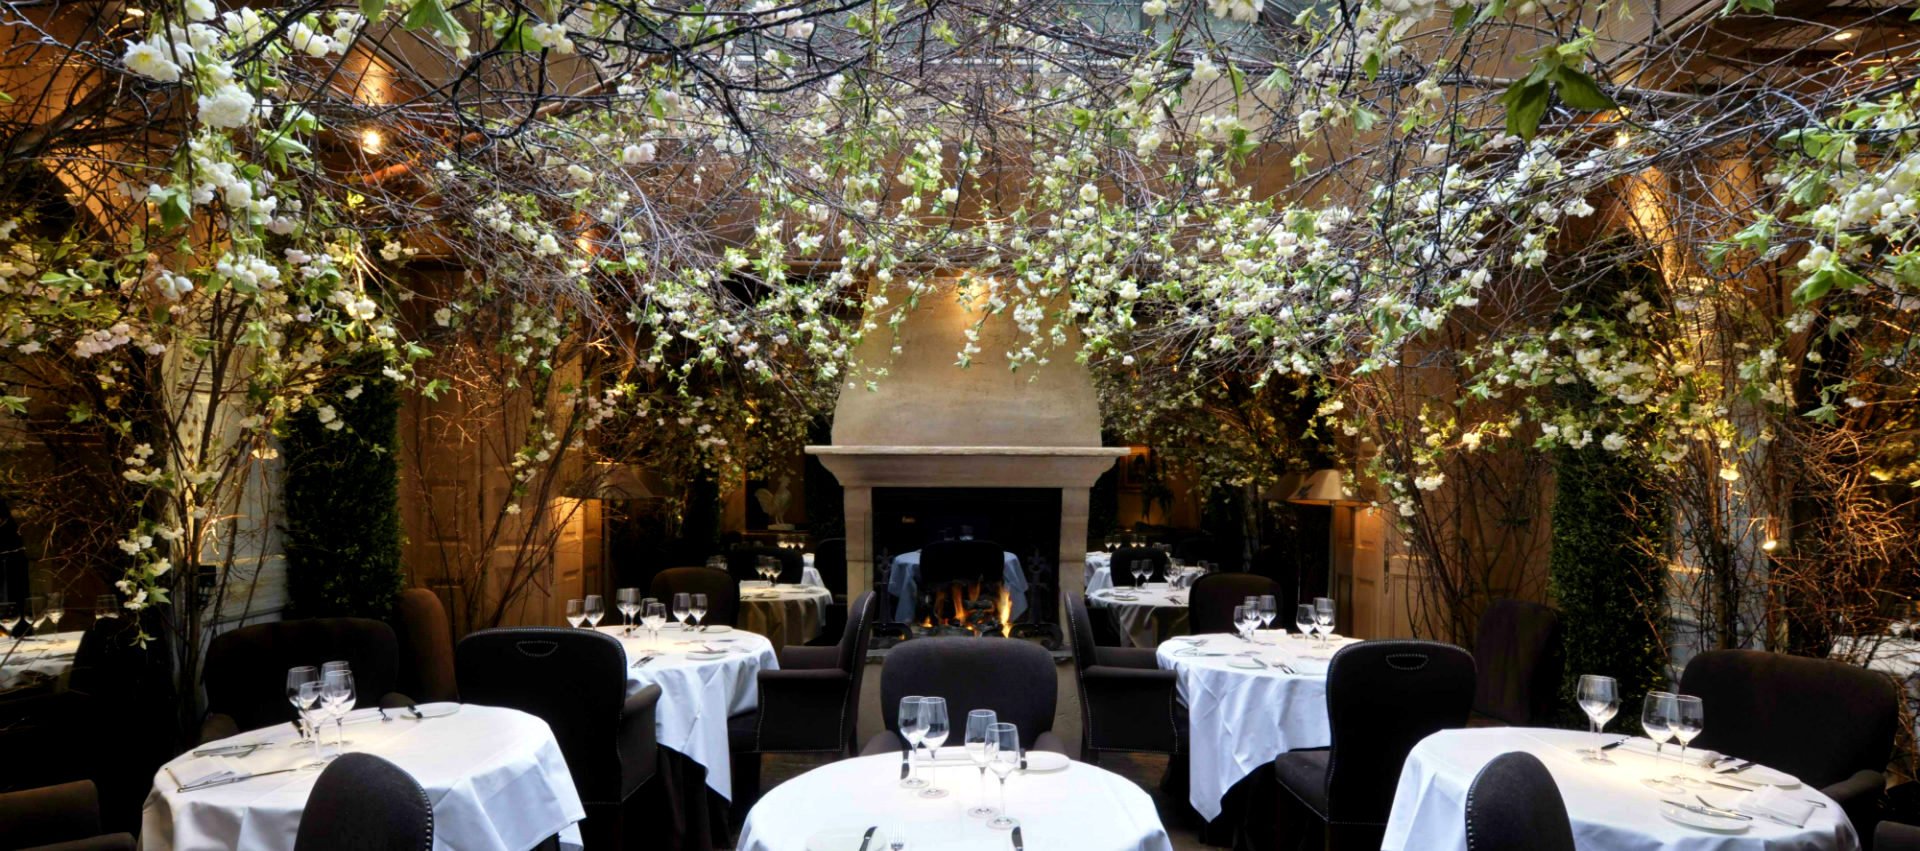 The Best Covent Garden Restaurants The Nudge London